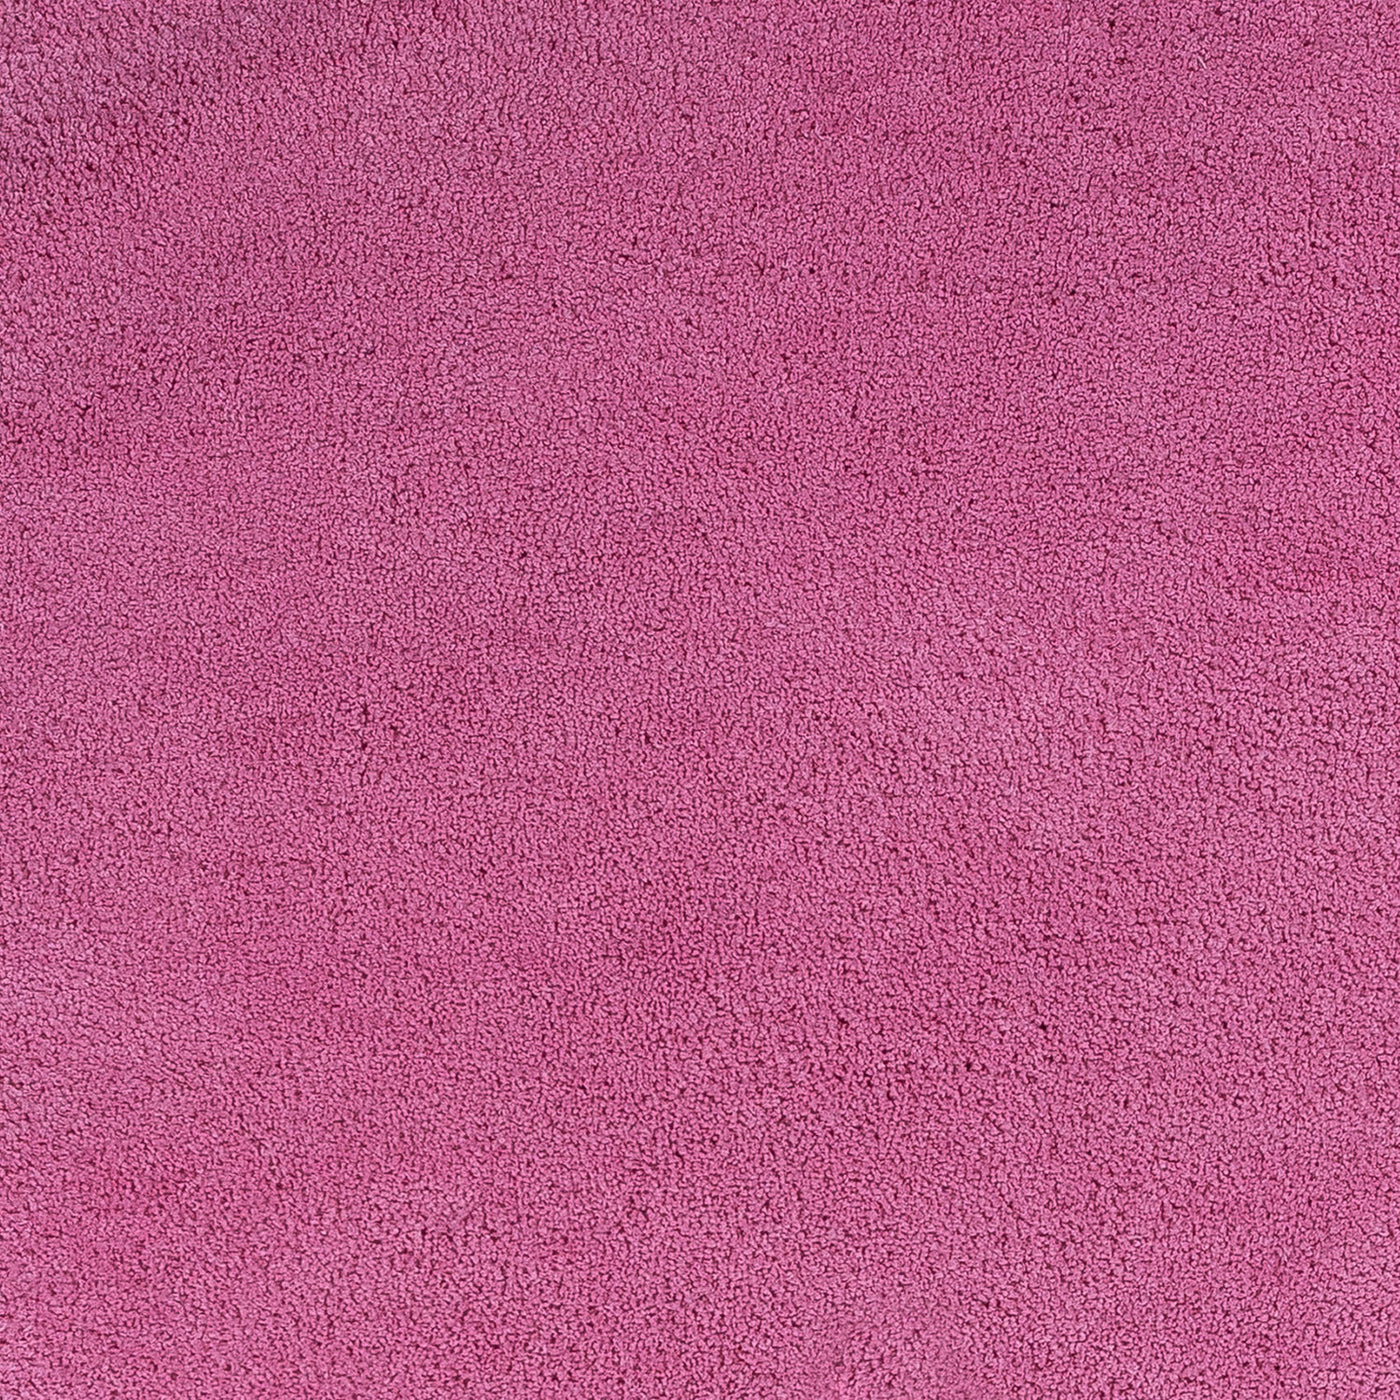 Bahia XII 5' x 7' - Hot Pink Area Rug